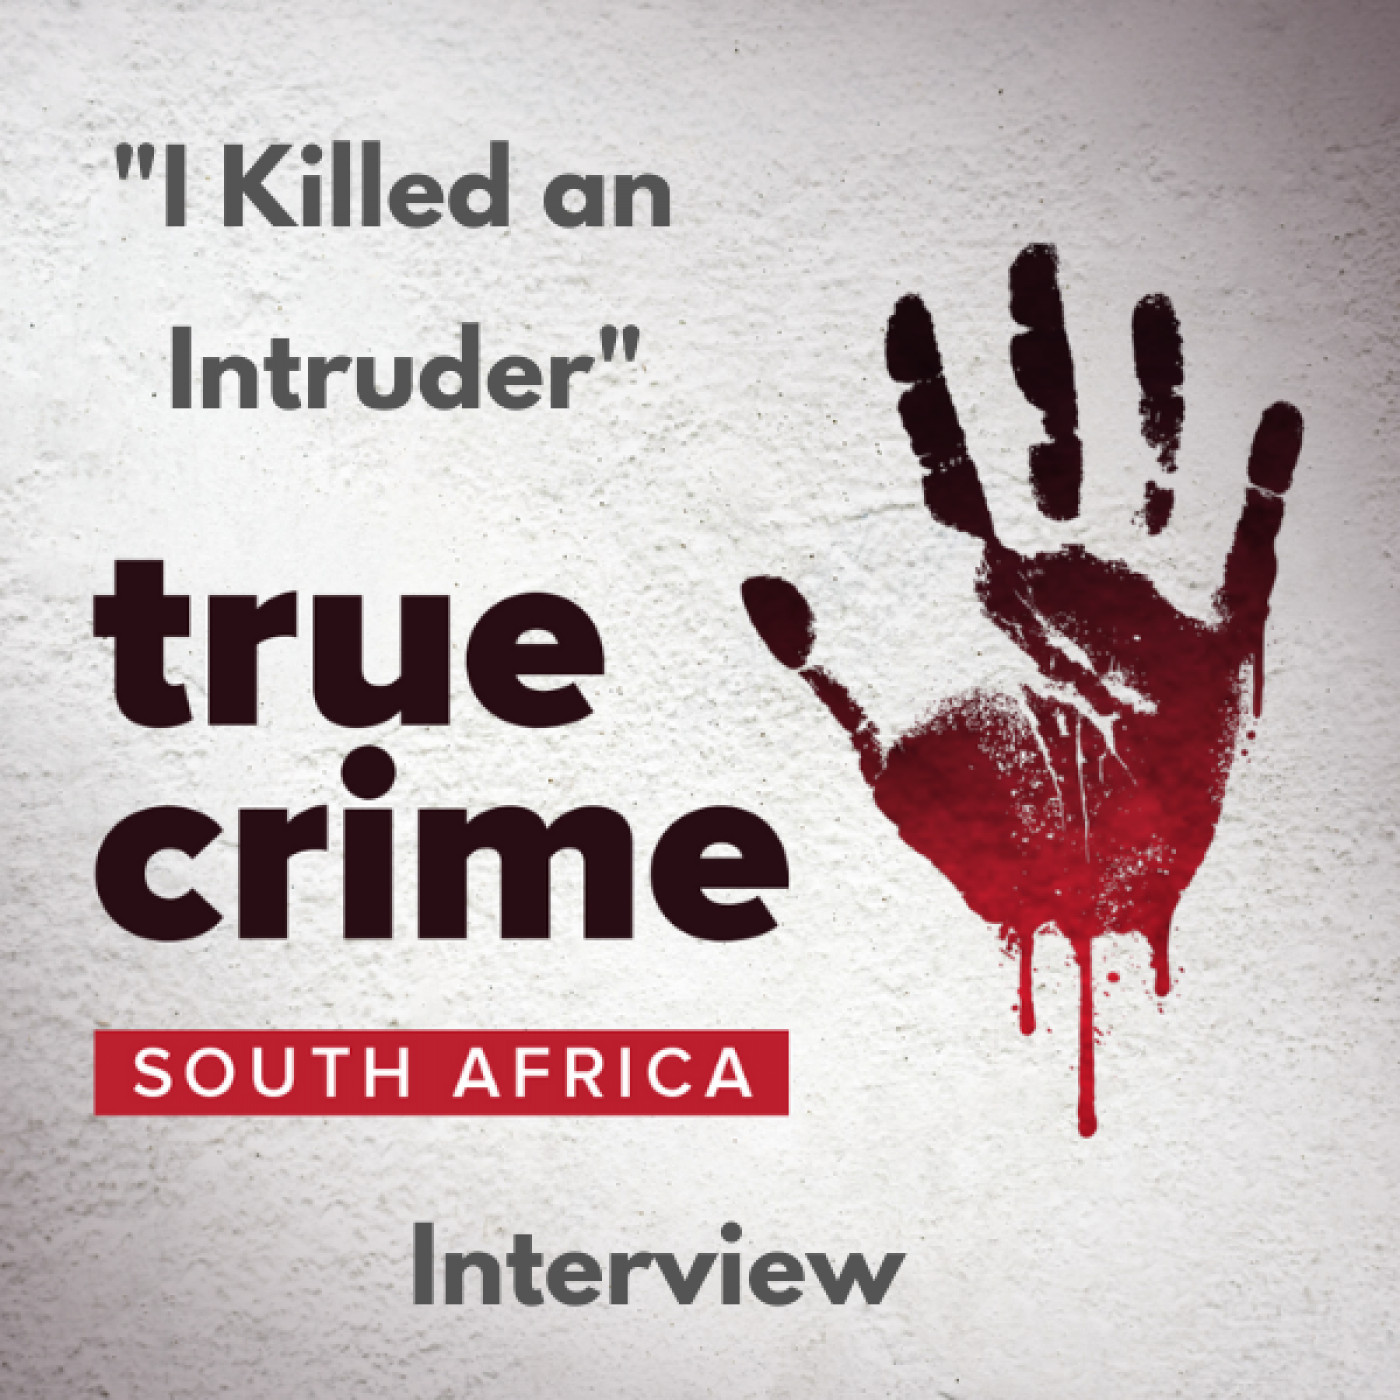 Interview: ”I Killed an Intruder”